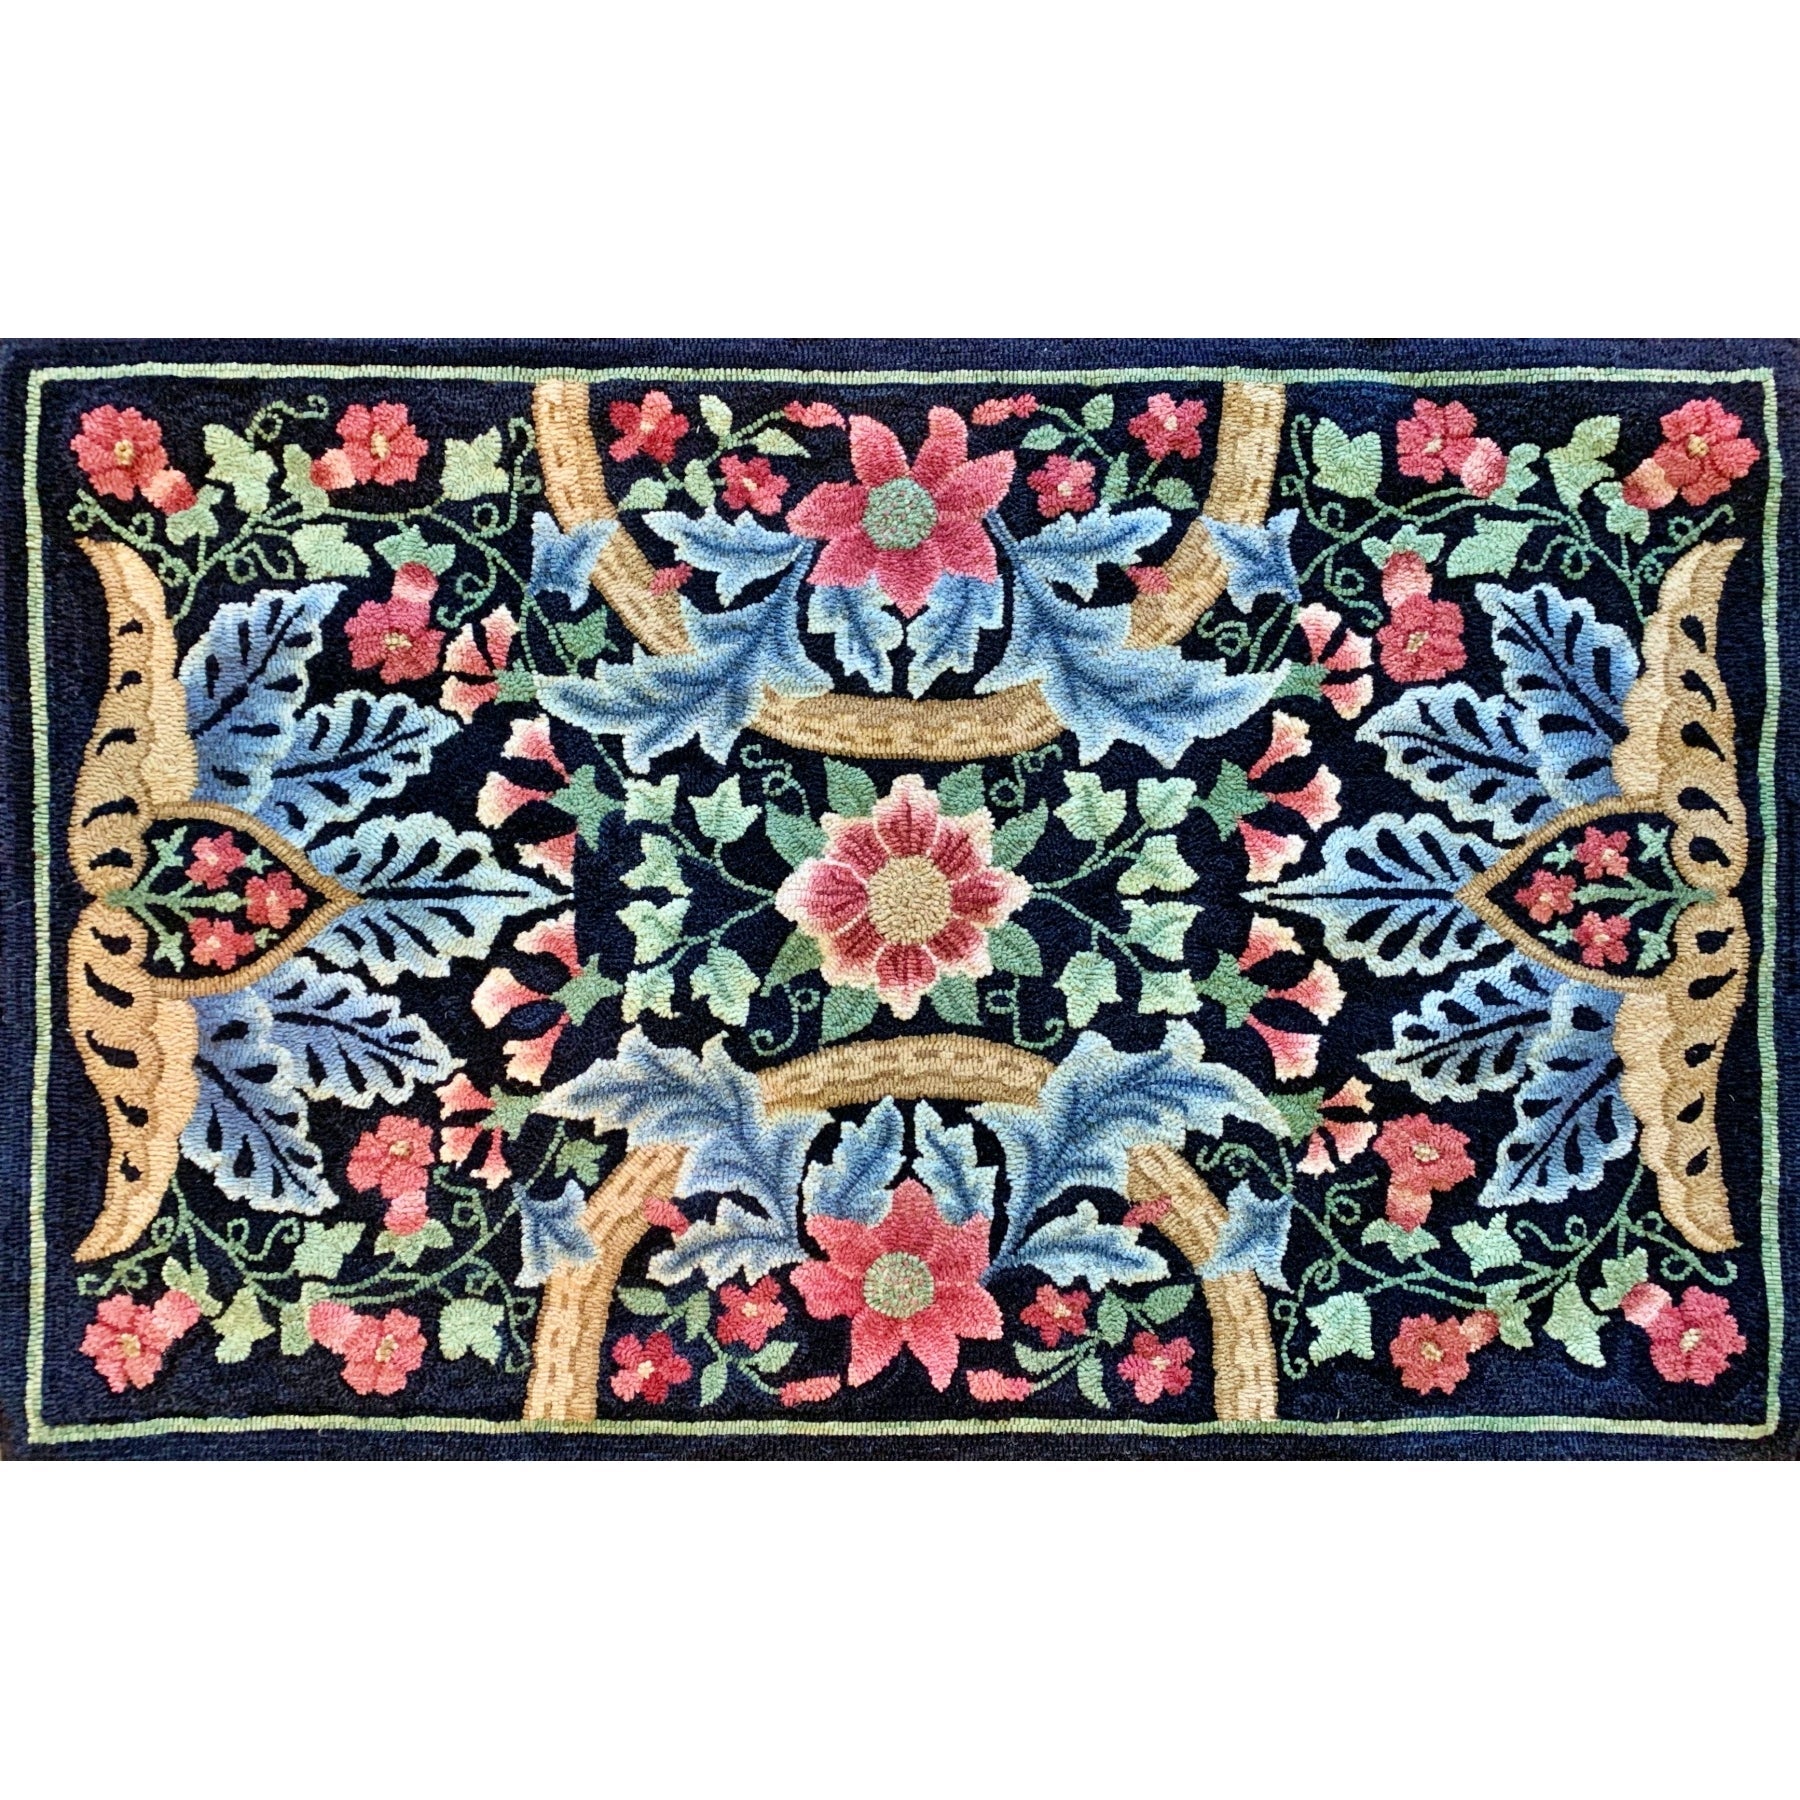 Morris Victorian, rug hooked by Margaret Bedle